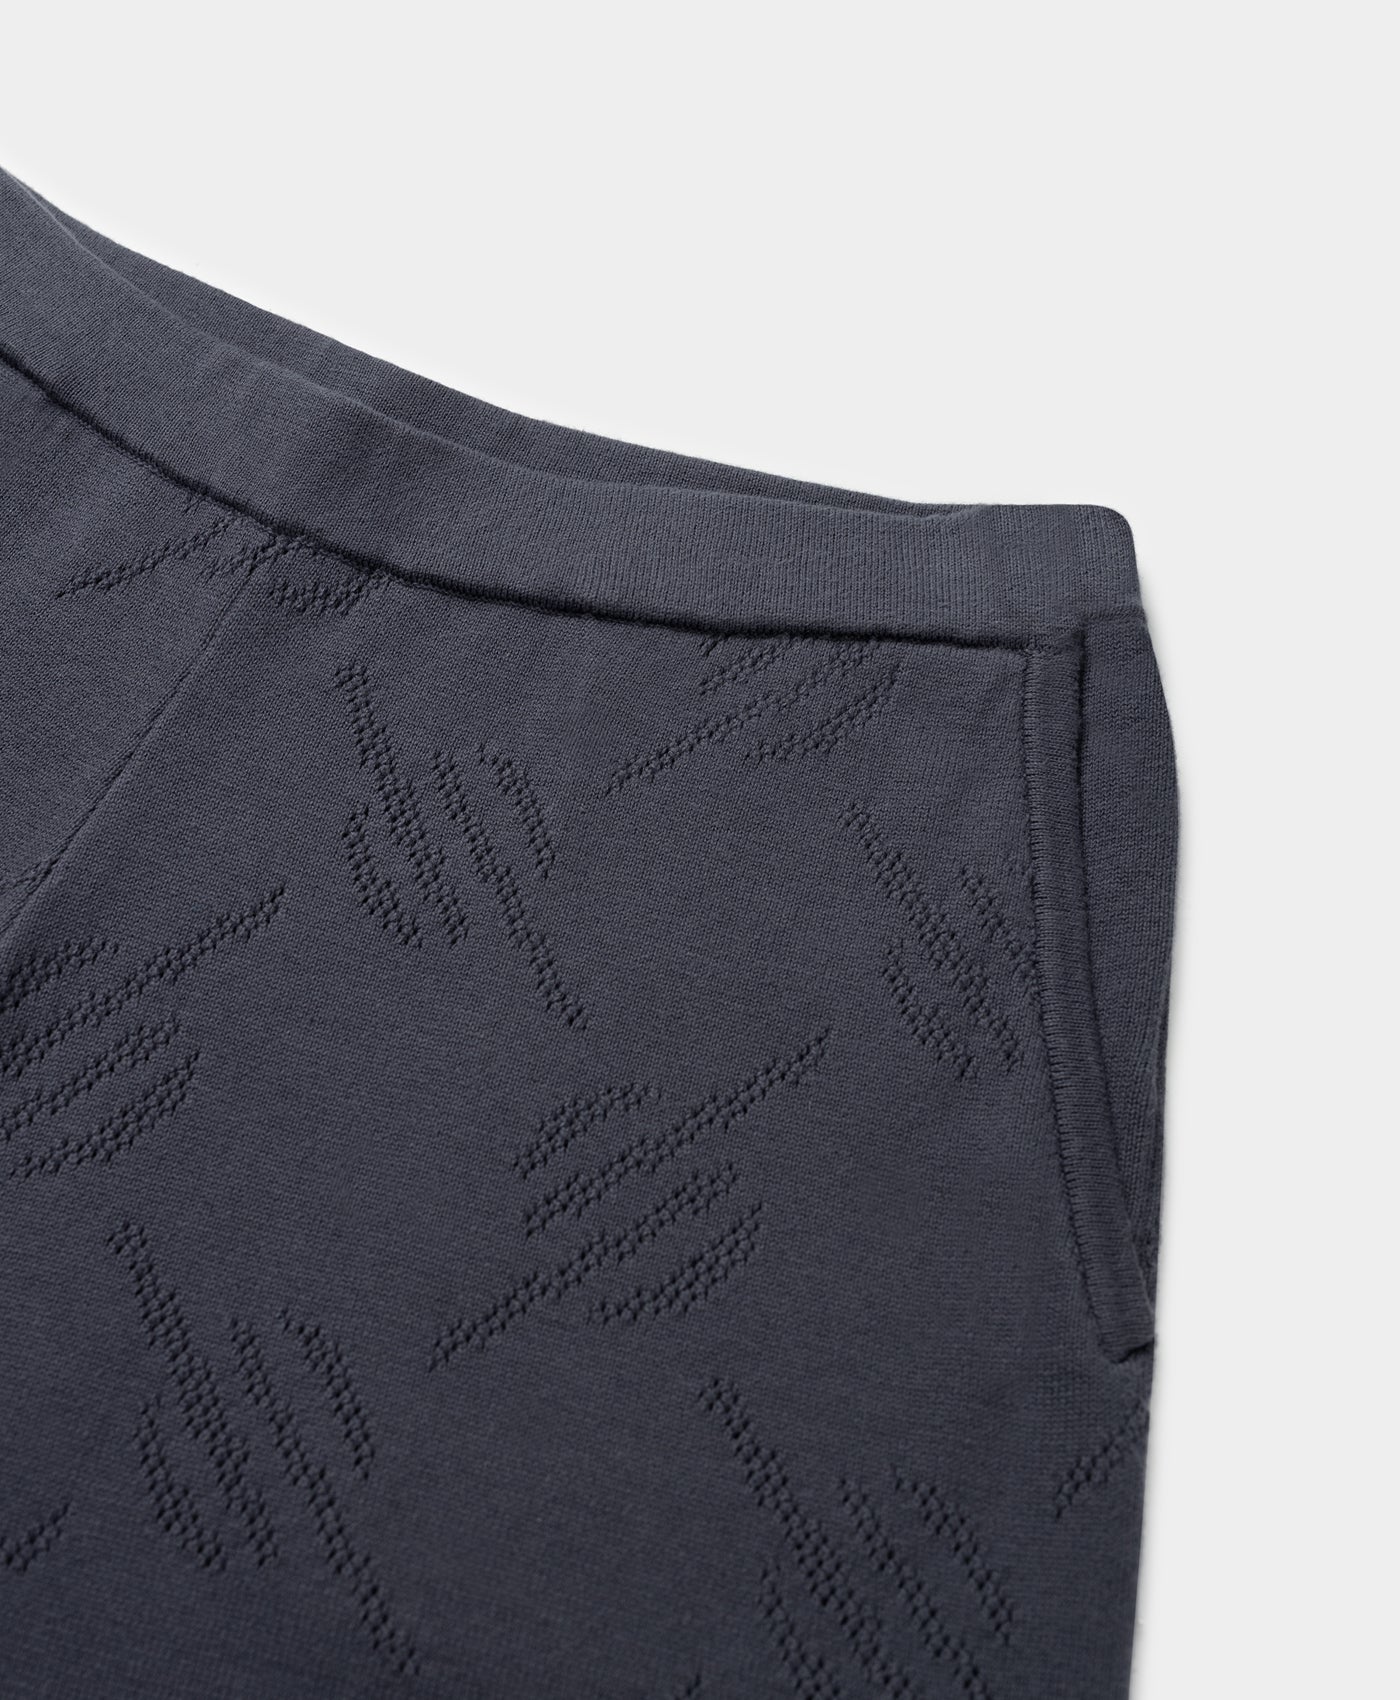 DP - Iron Grey Ralo Shorts - Packshot